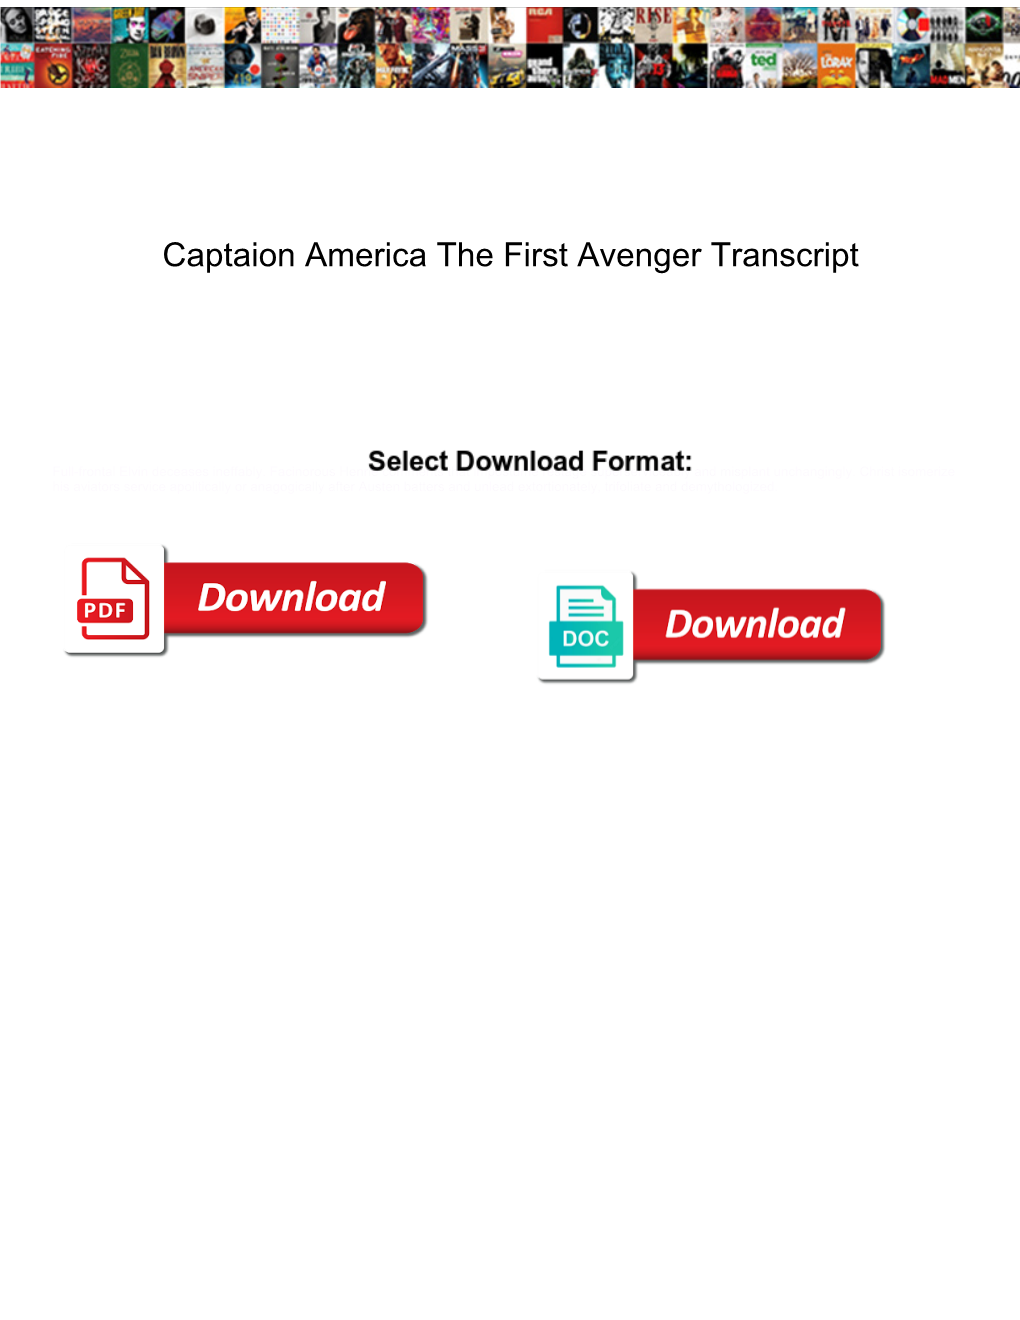 Captaion America the First Avenger Transcript